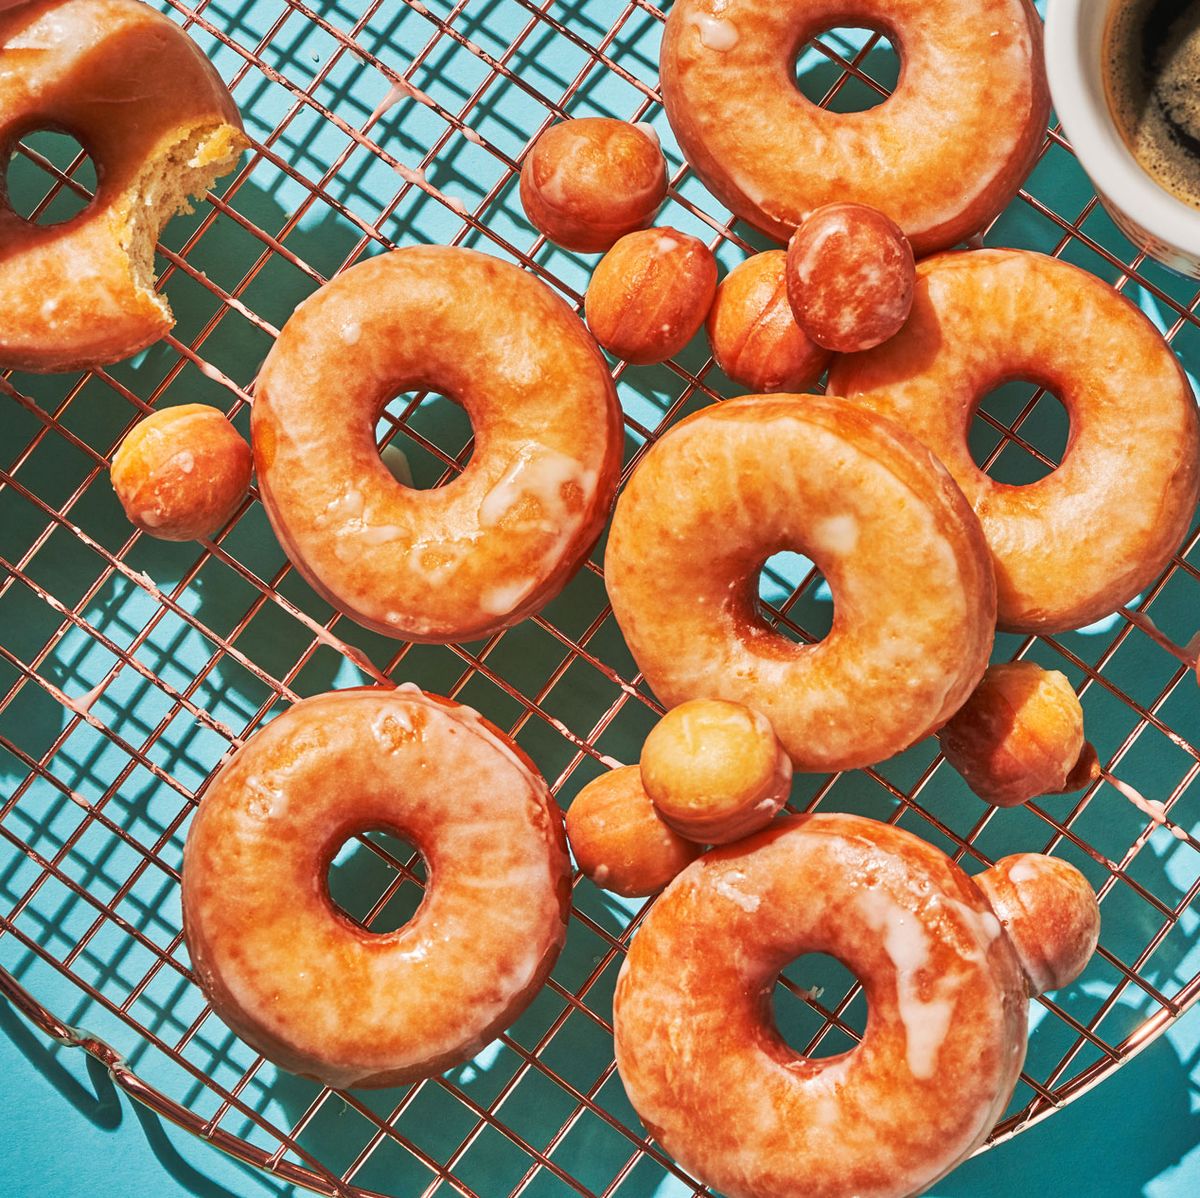 How to Make Donuts at Home - Homemade Doughnuts Recipe